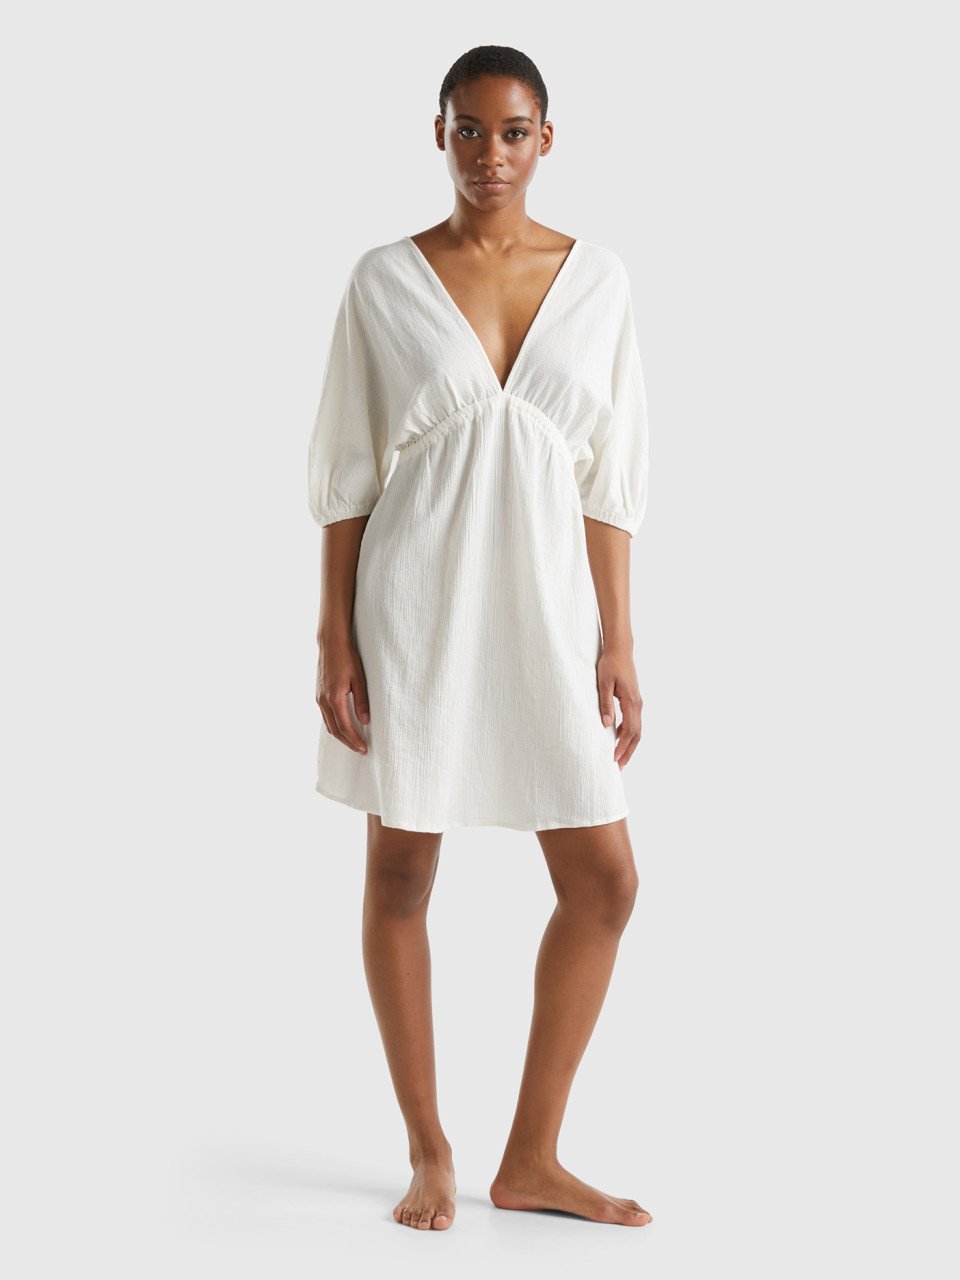 Benetton, Short 100% Cotton Dress, Creamy White, Women